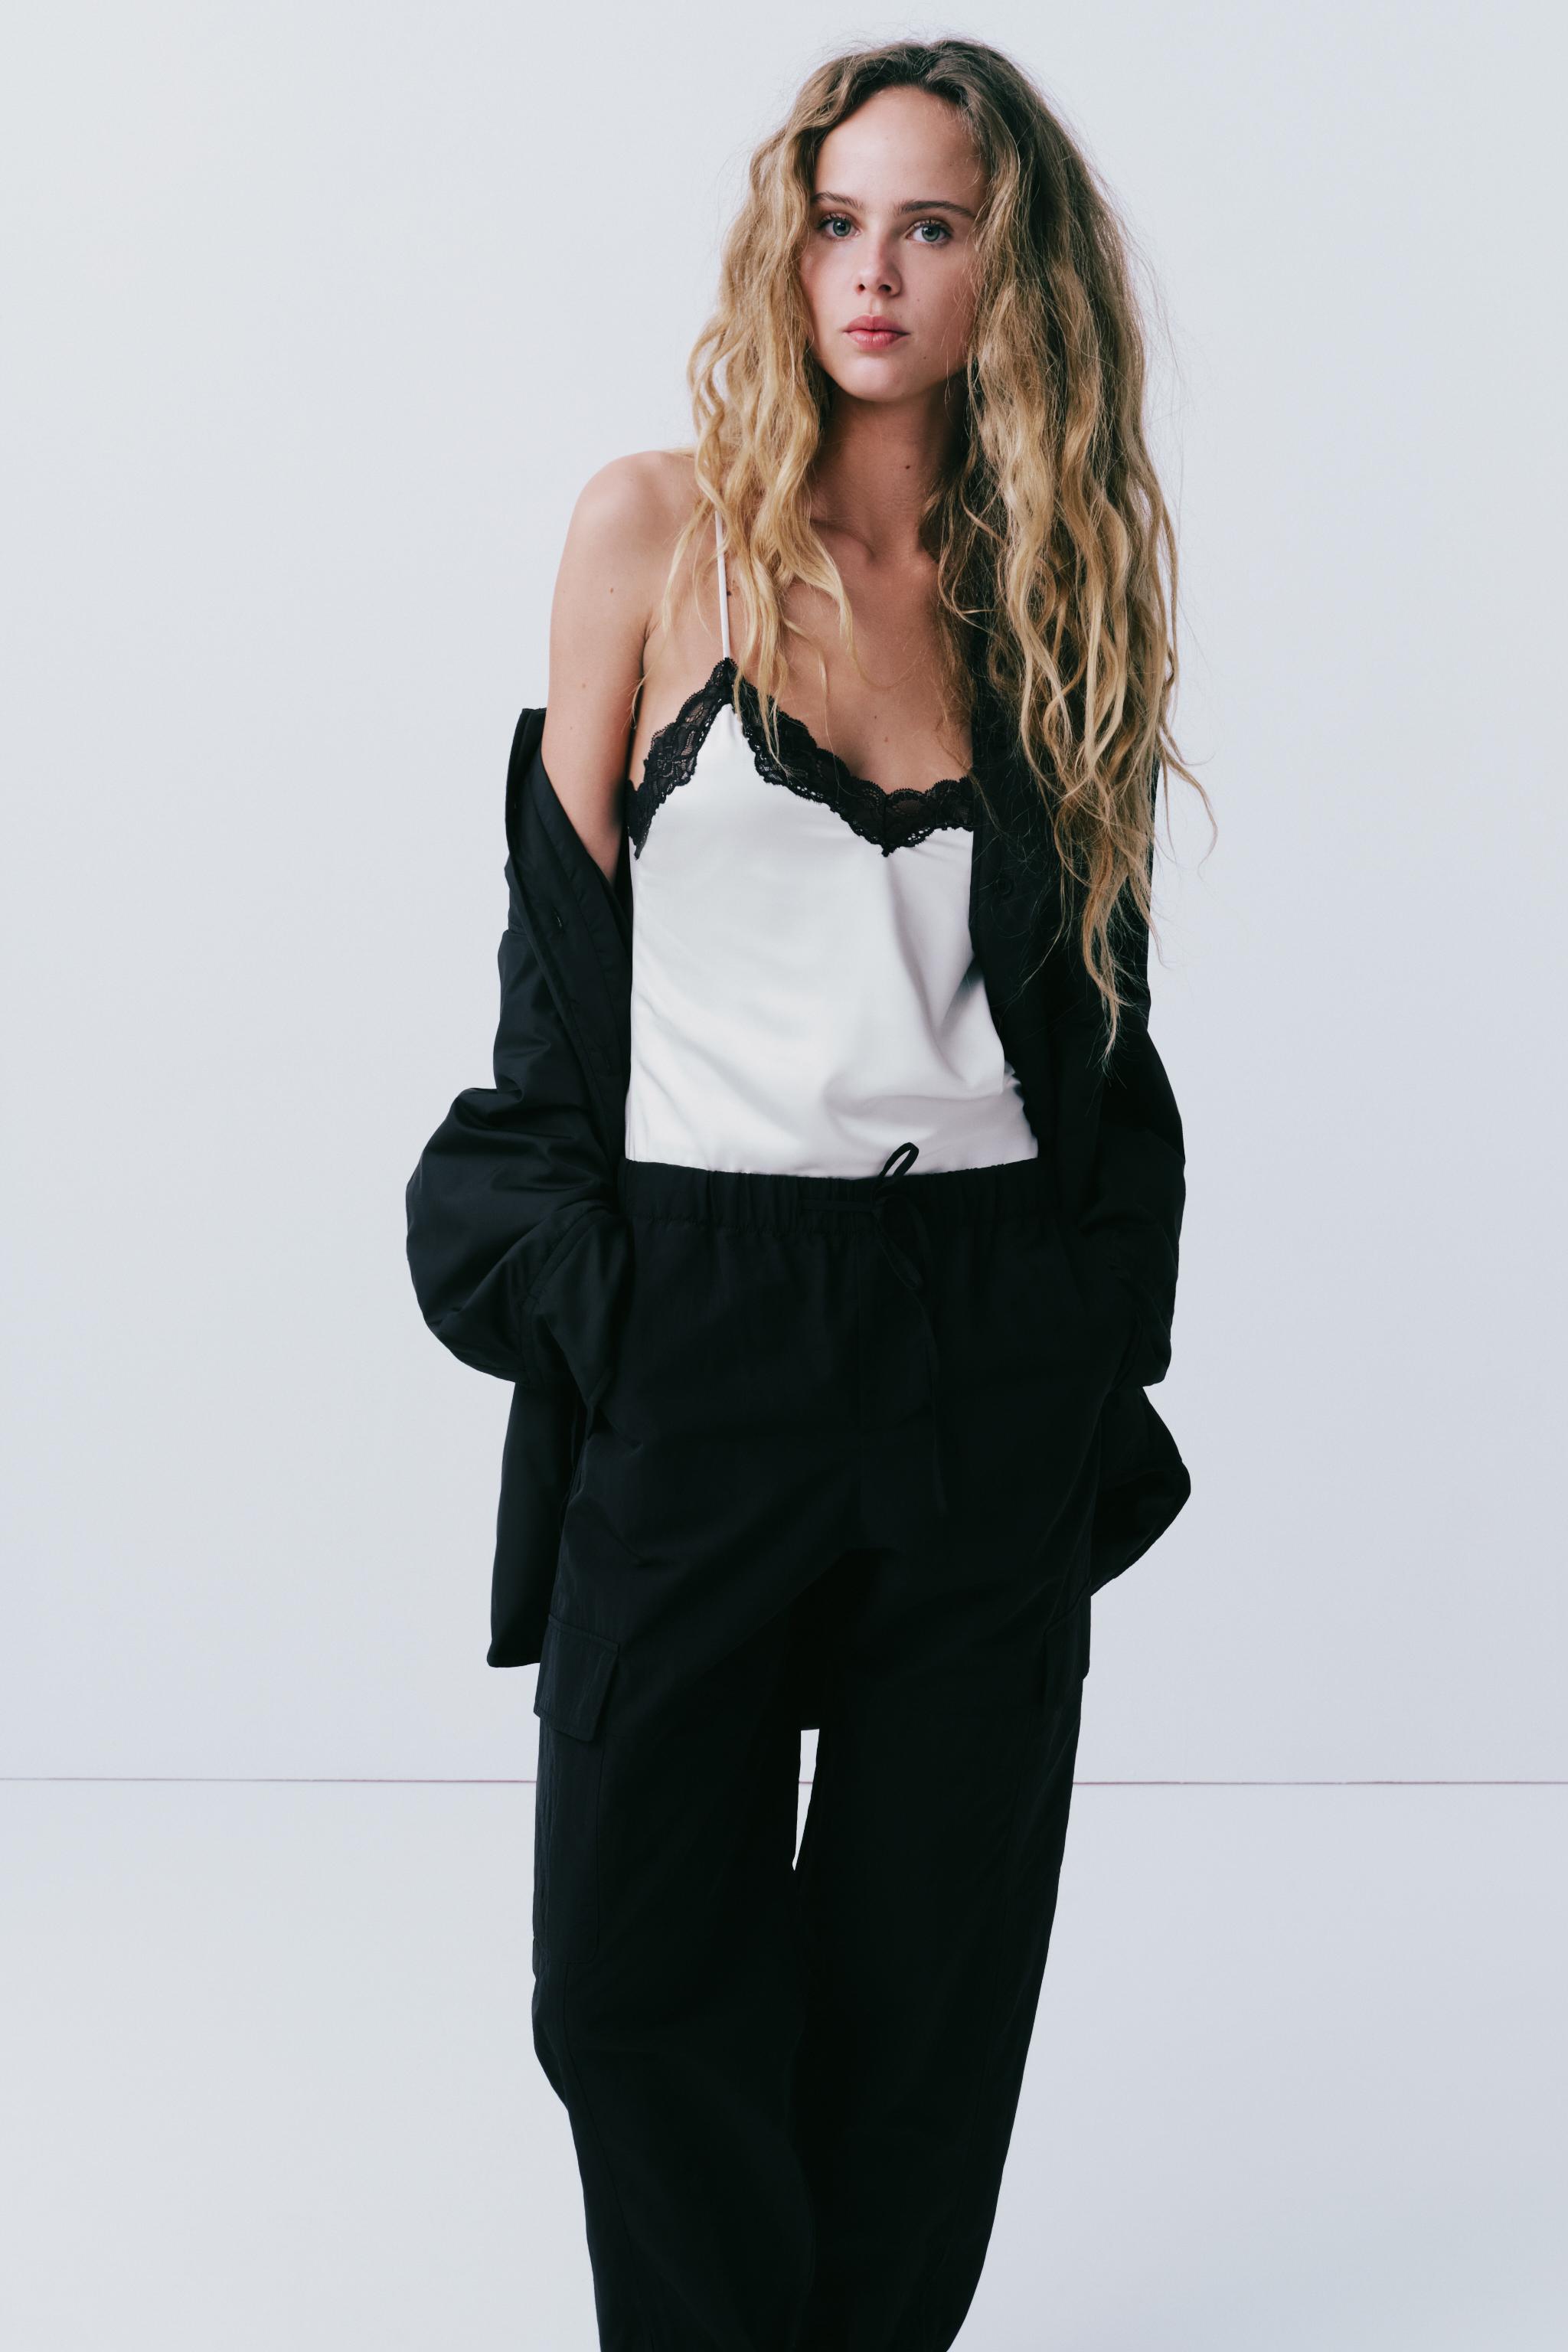 Zara Trafaluc Black Lace Bodysuit V-Neck One-Piece Medium Sheer